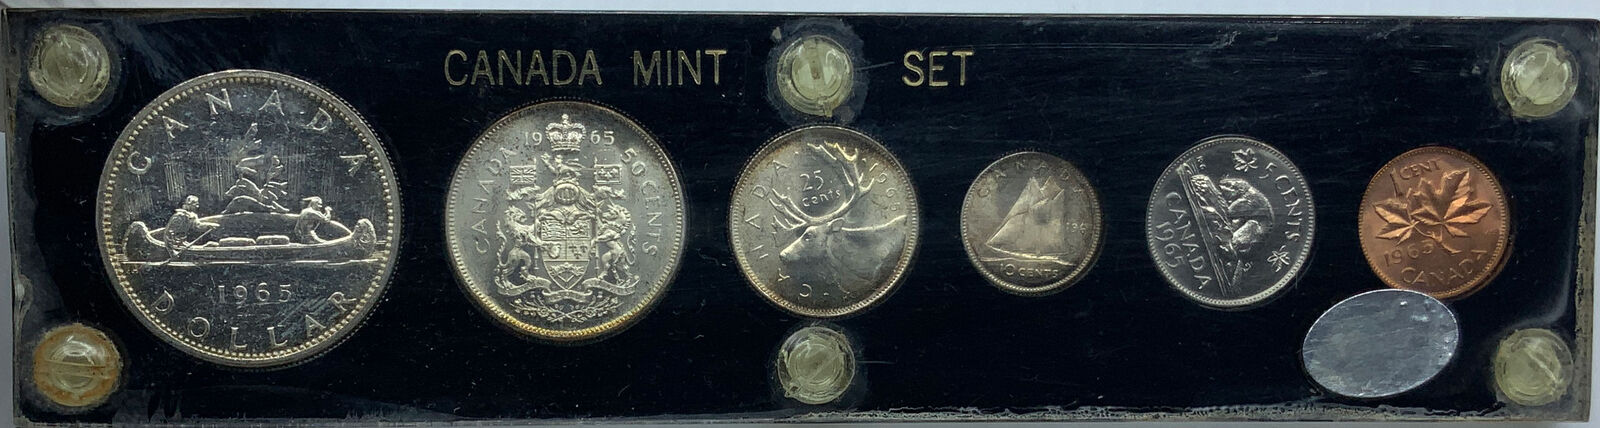 1965 CANADA Queen Elizabeth II MINT SET of 6 Coins 4 are Silver Dollar i114730